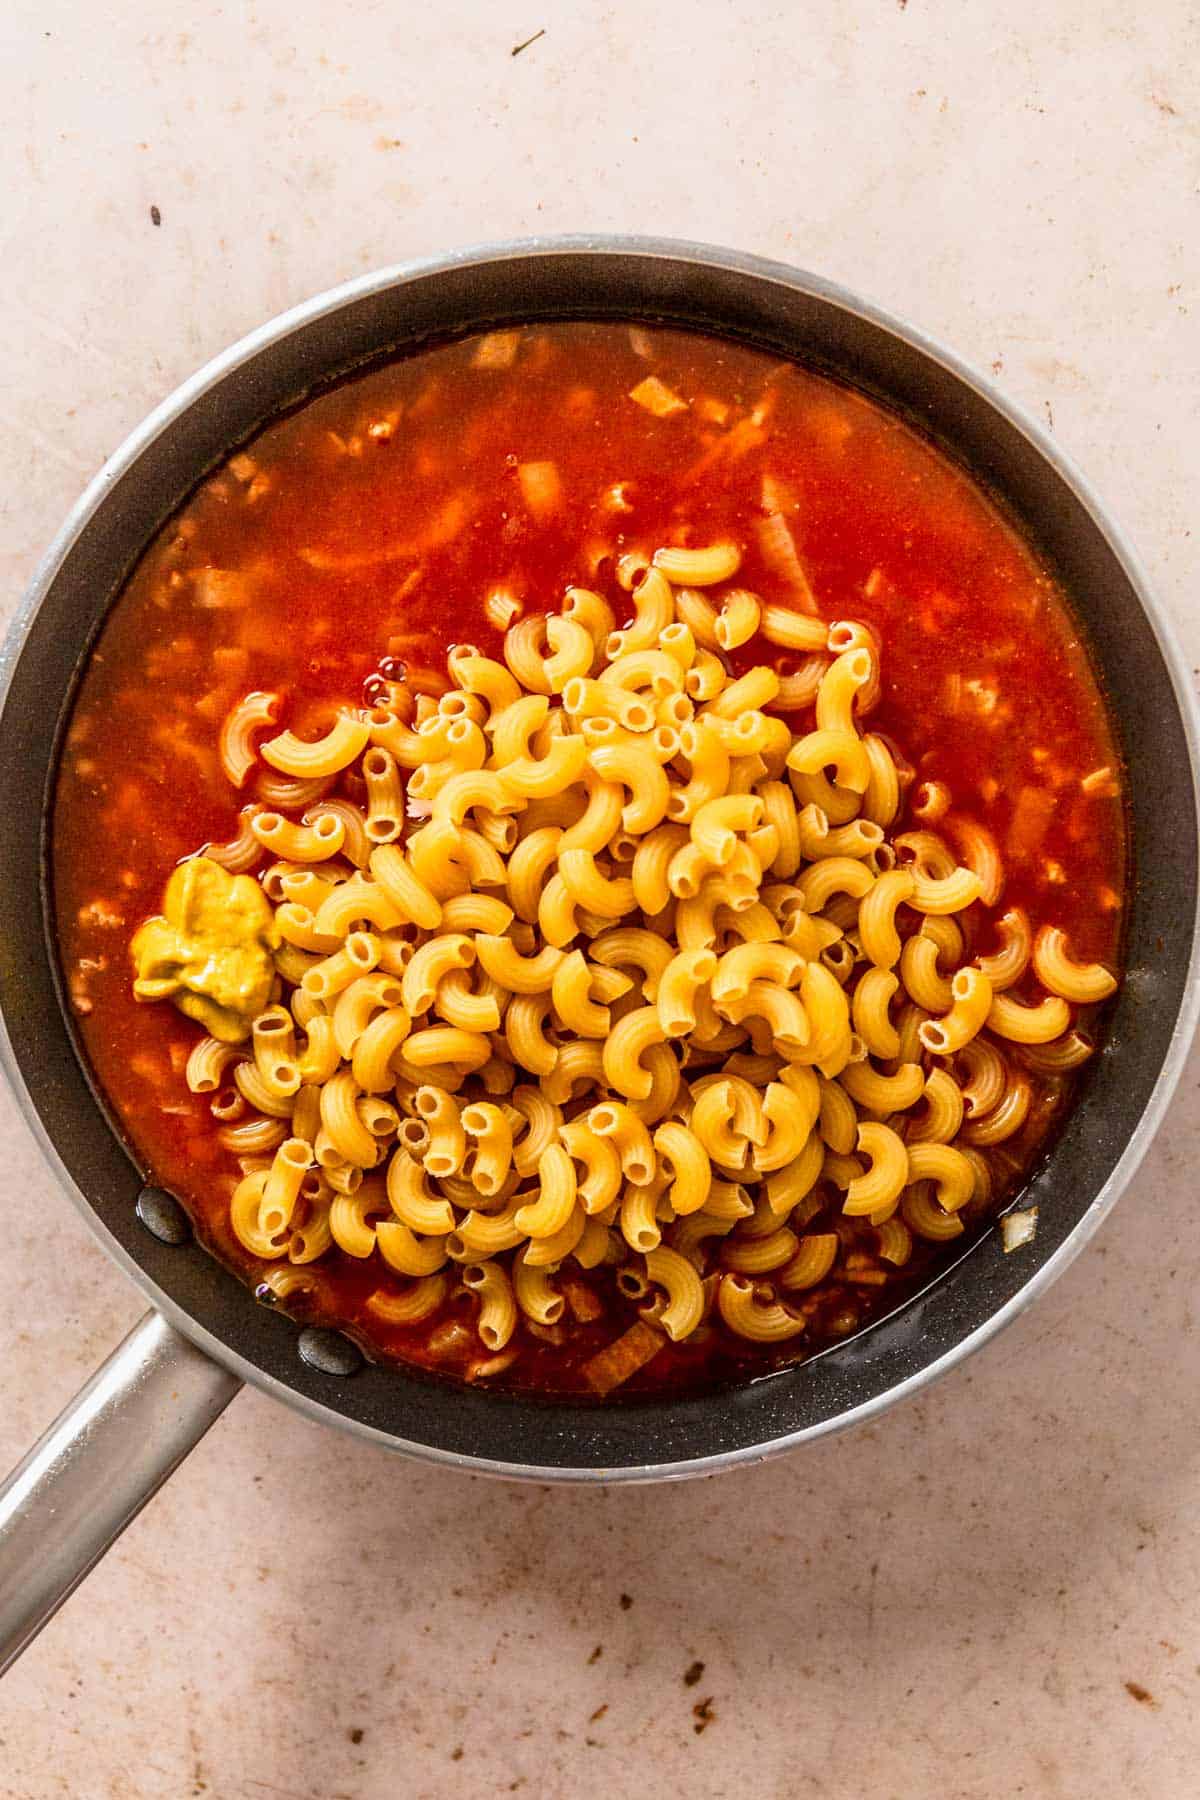 dry macaroni pasta added to tomato sauce